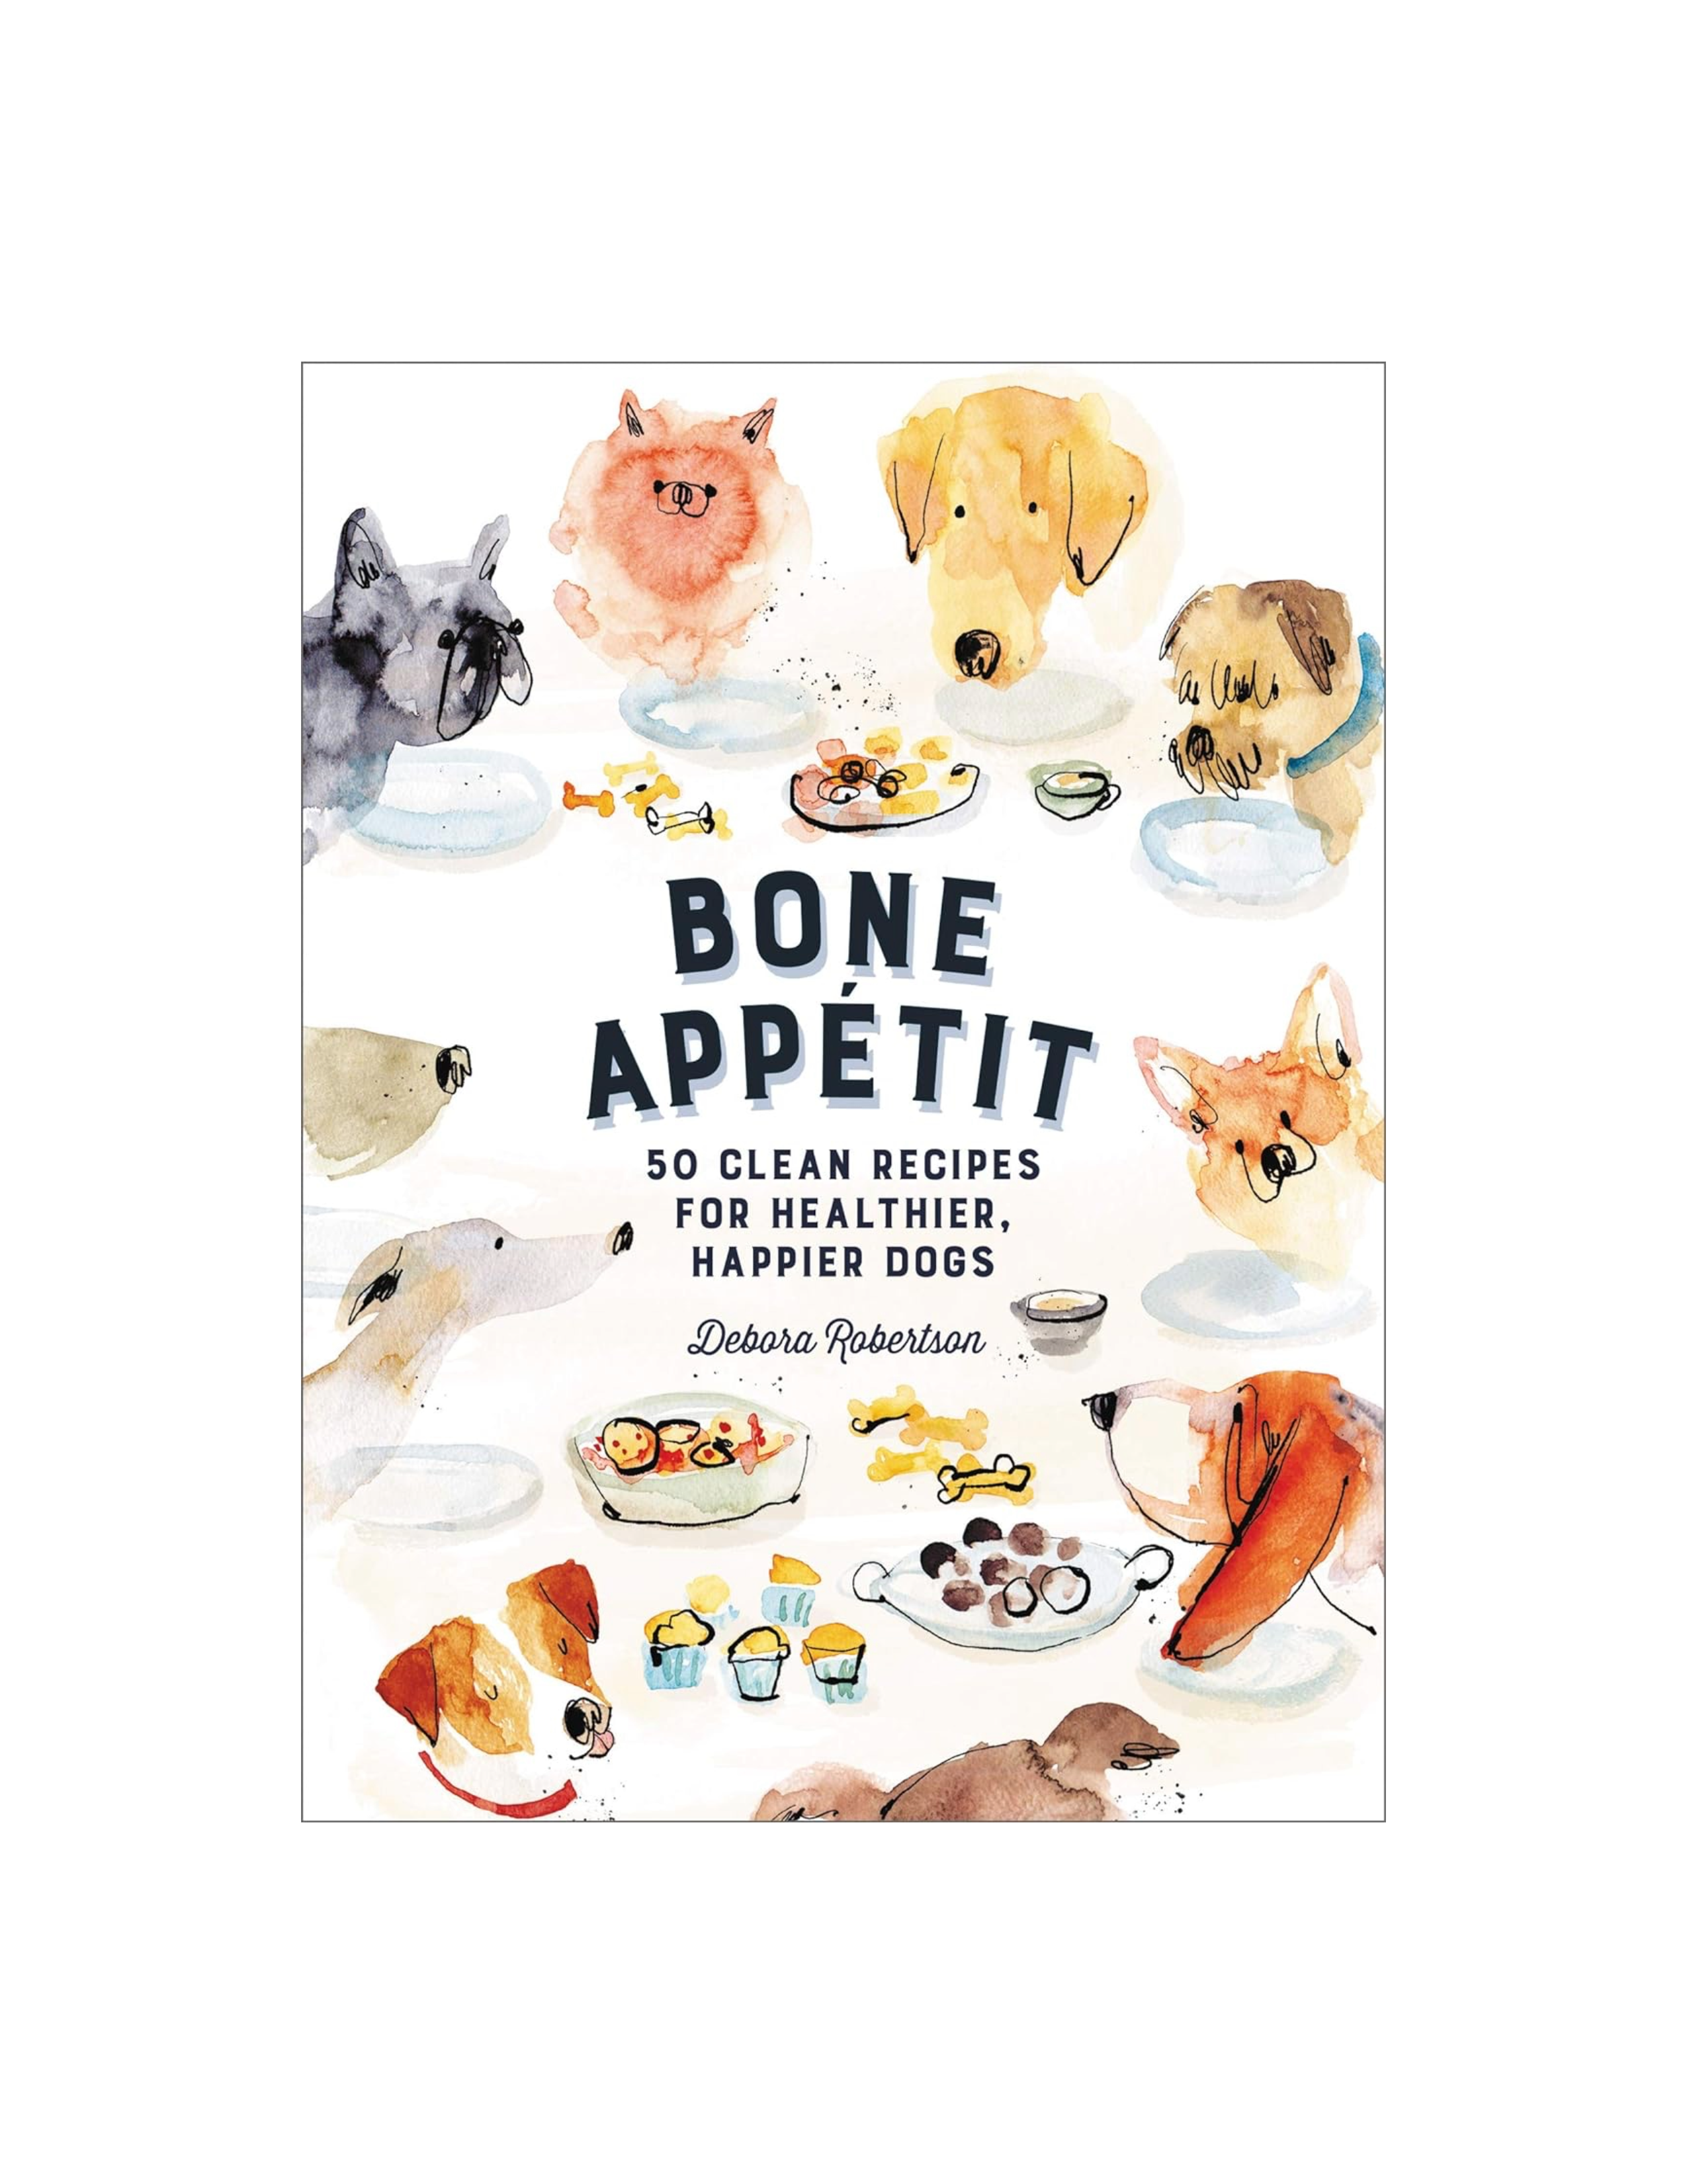 Bone Appetit: 50 Clean Recipes for Healthier, Happier Dogs